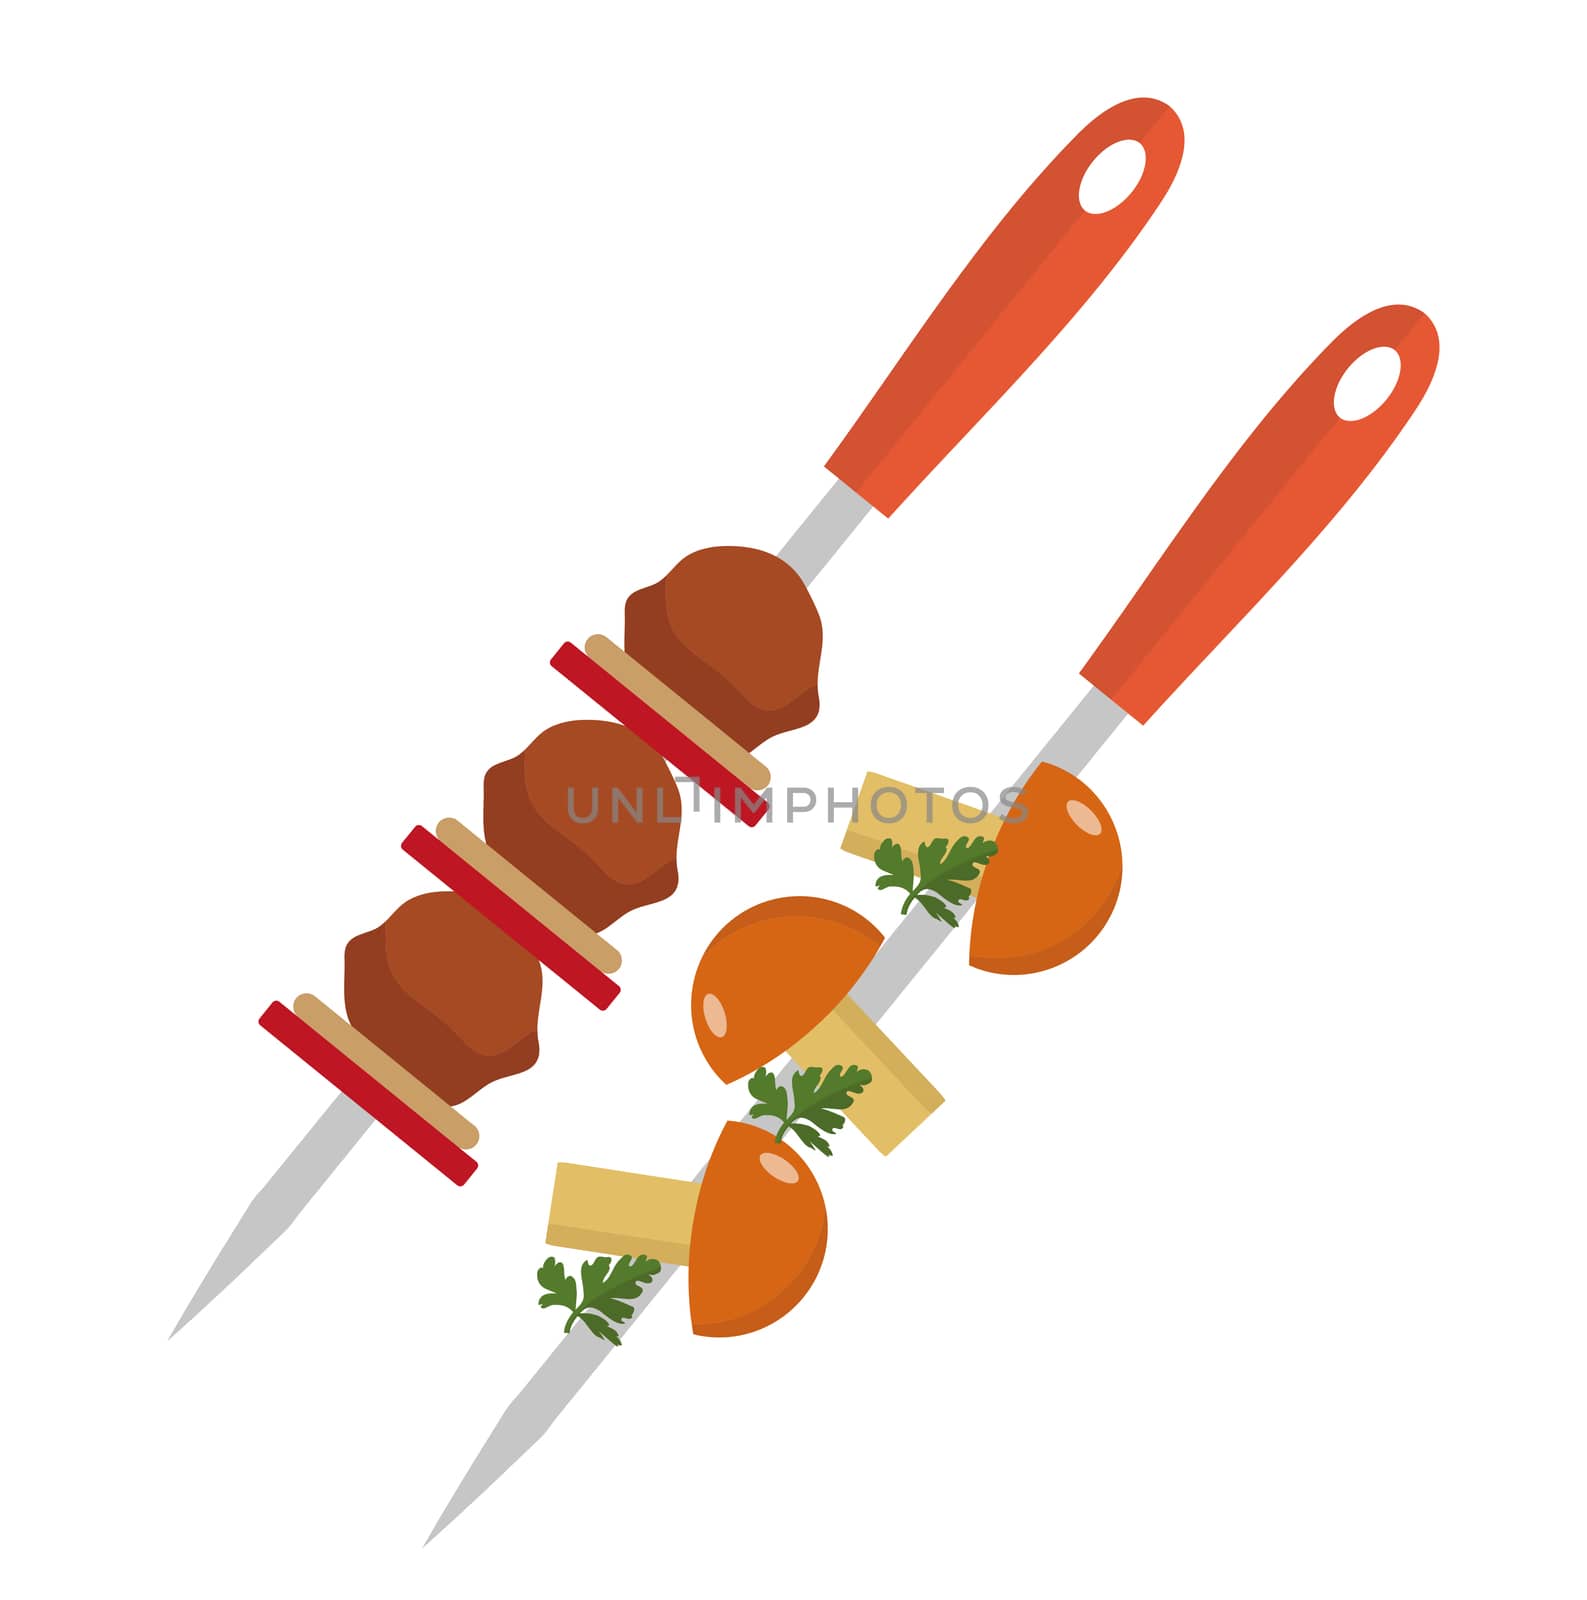 Shish kebab on skewers with pork and mushrooms icon, flat style. Isolated on white background. illustration